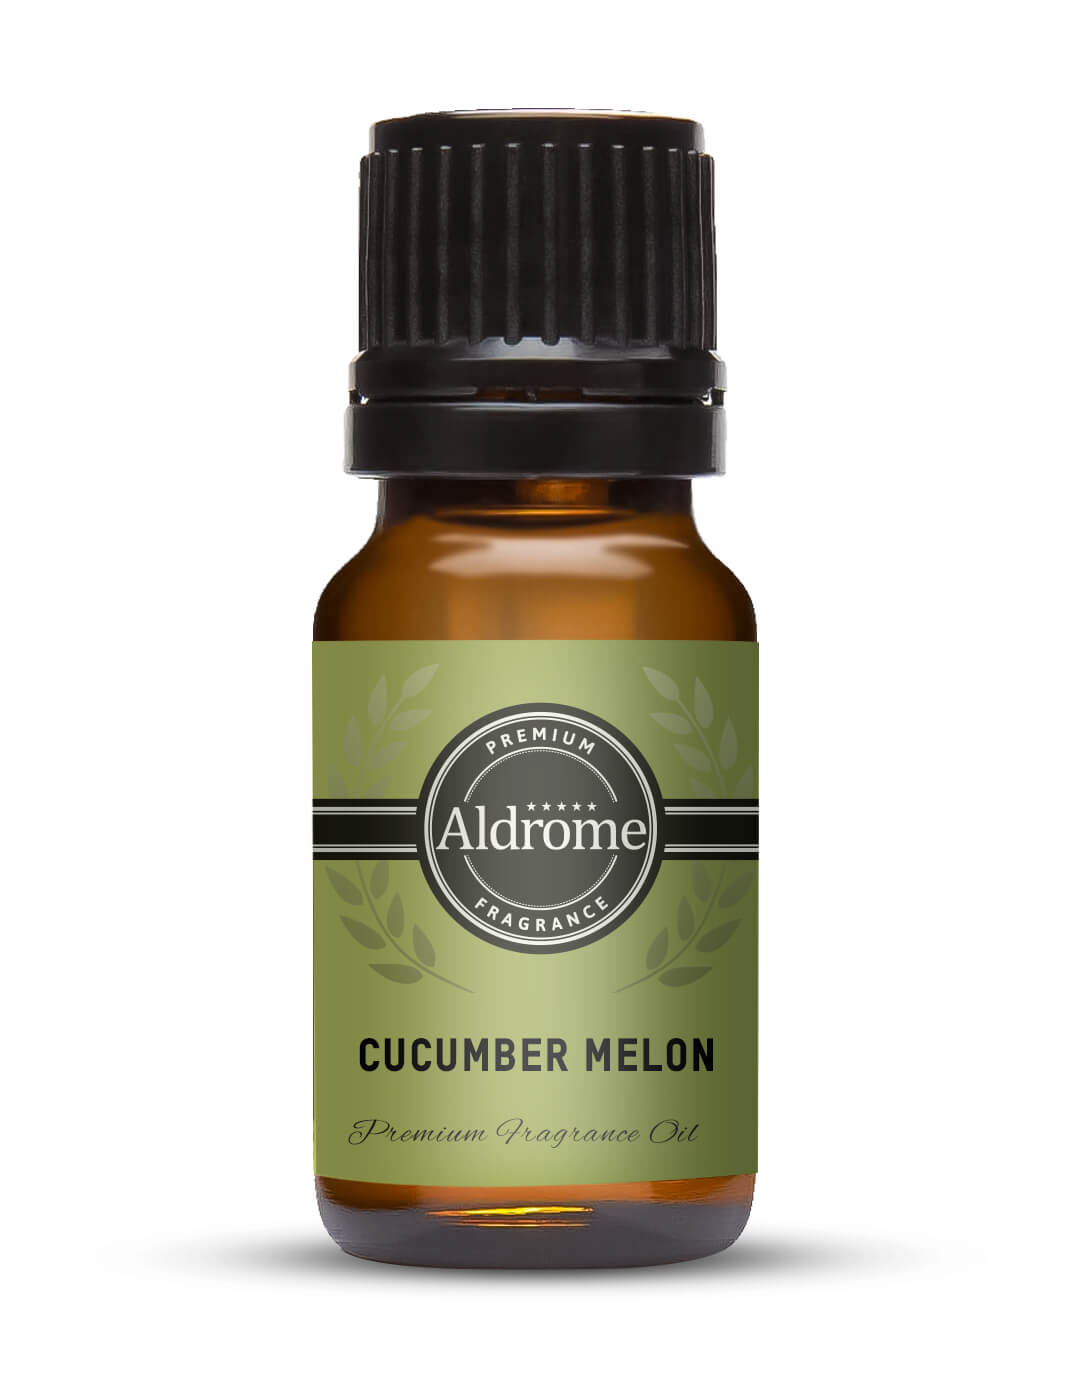 Cucumber Melon Fragrance Oil - 10ml at Best price | Aldrome Premium Fragrance Oil